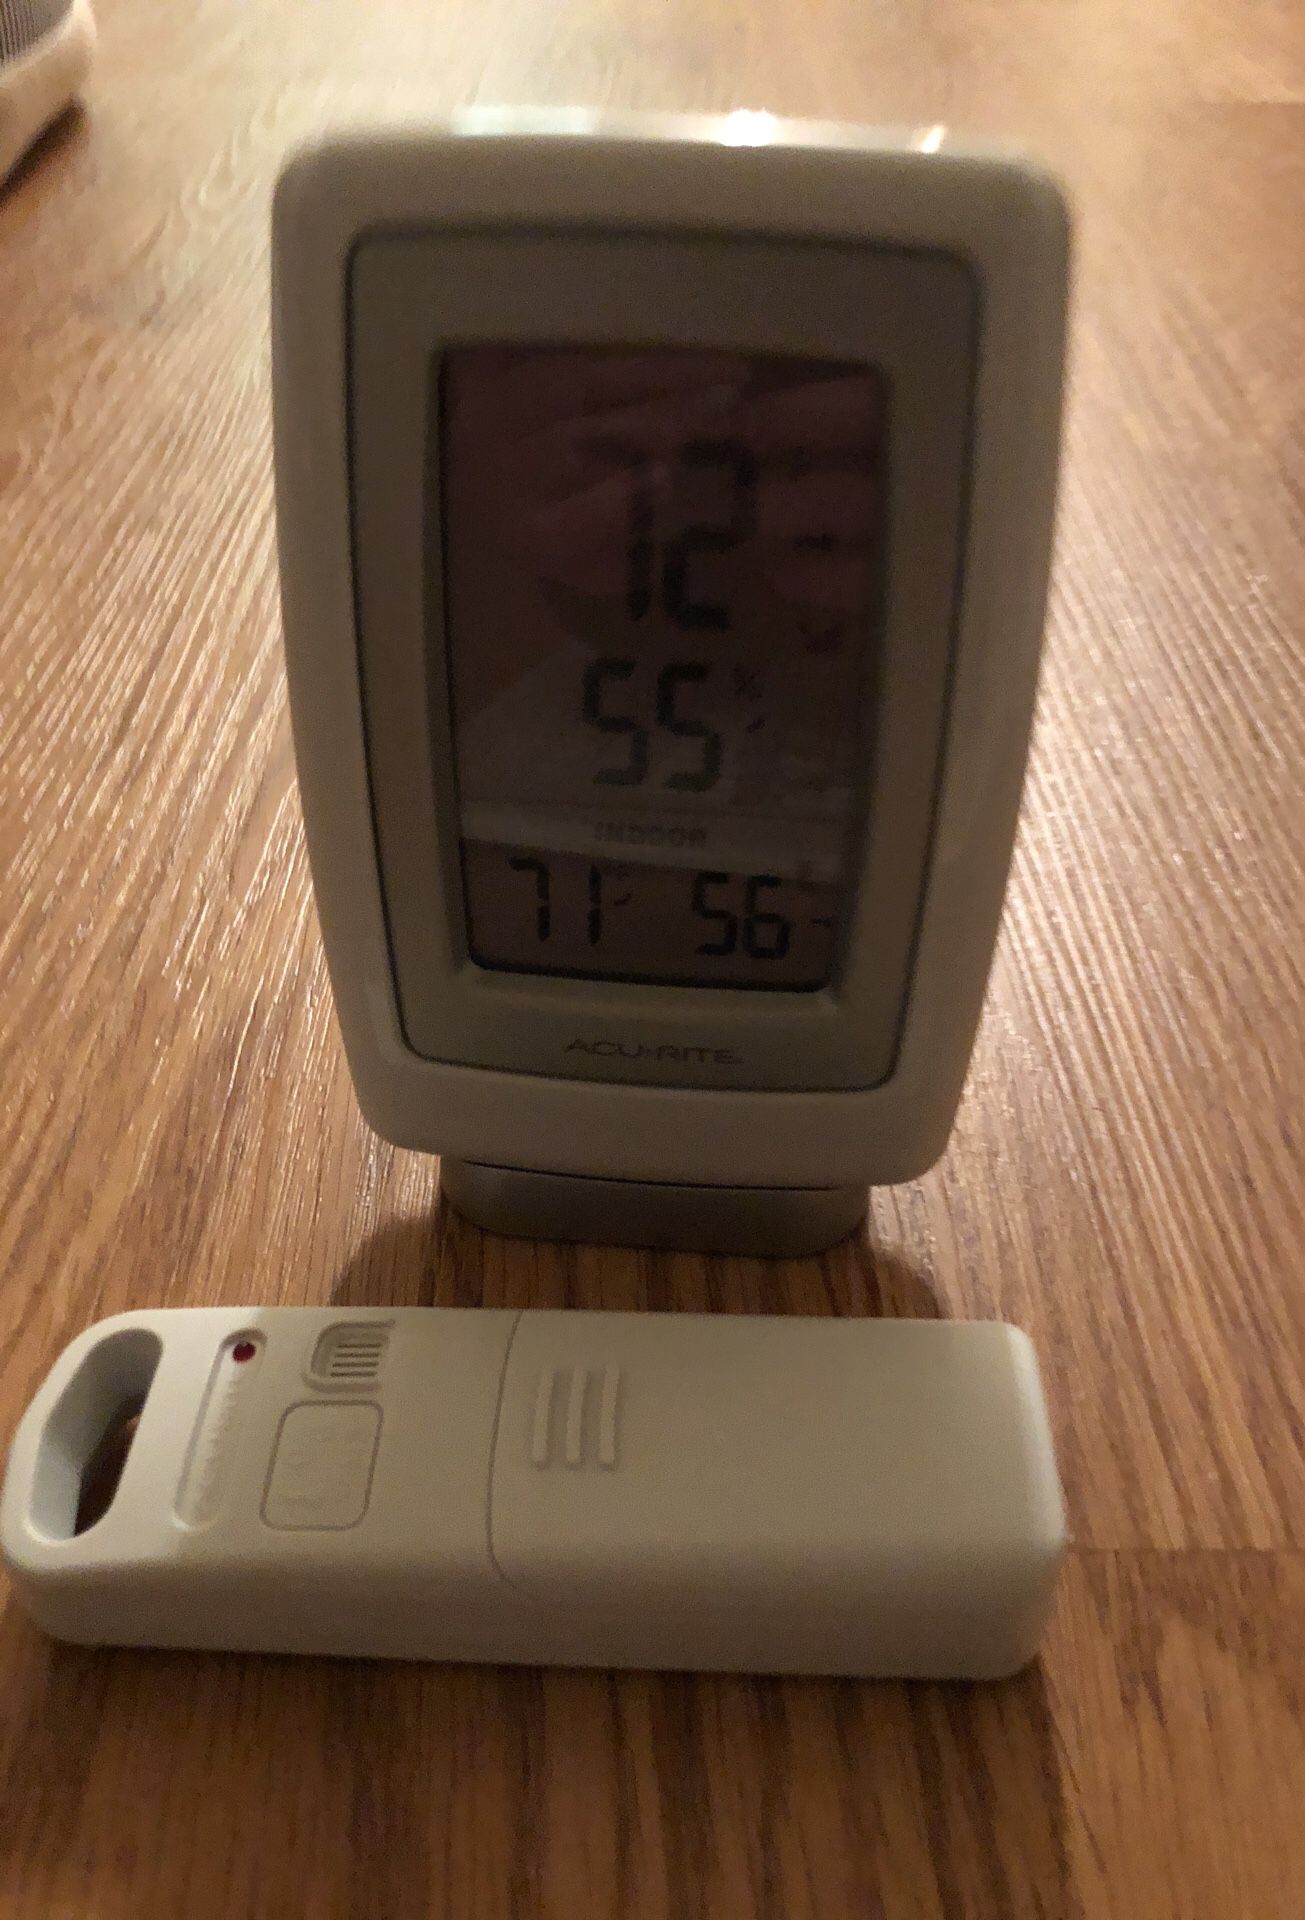 AcuRite - temperature and humidity